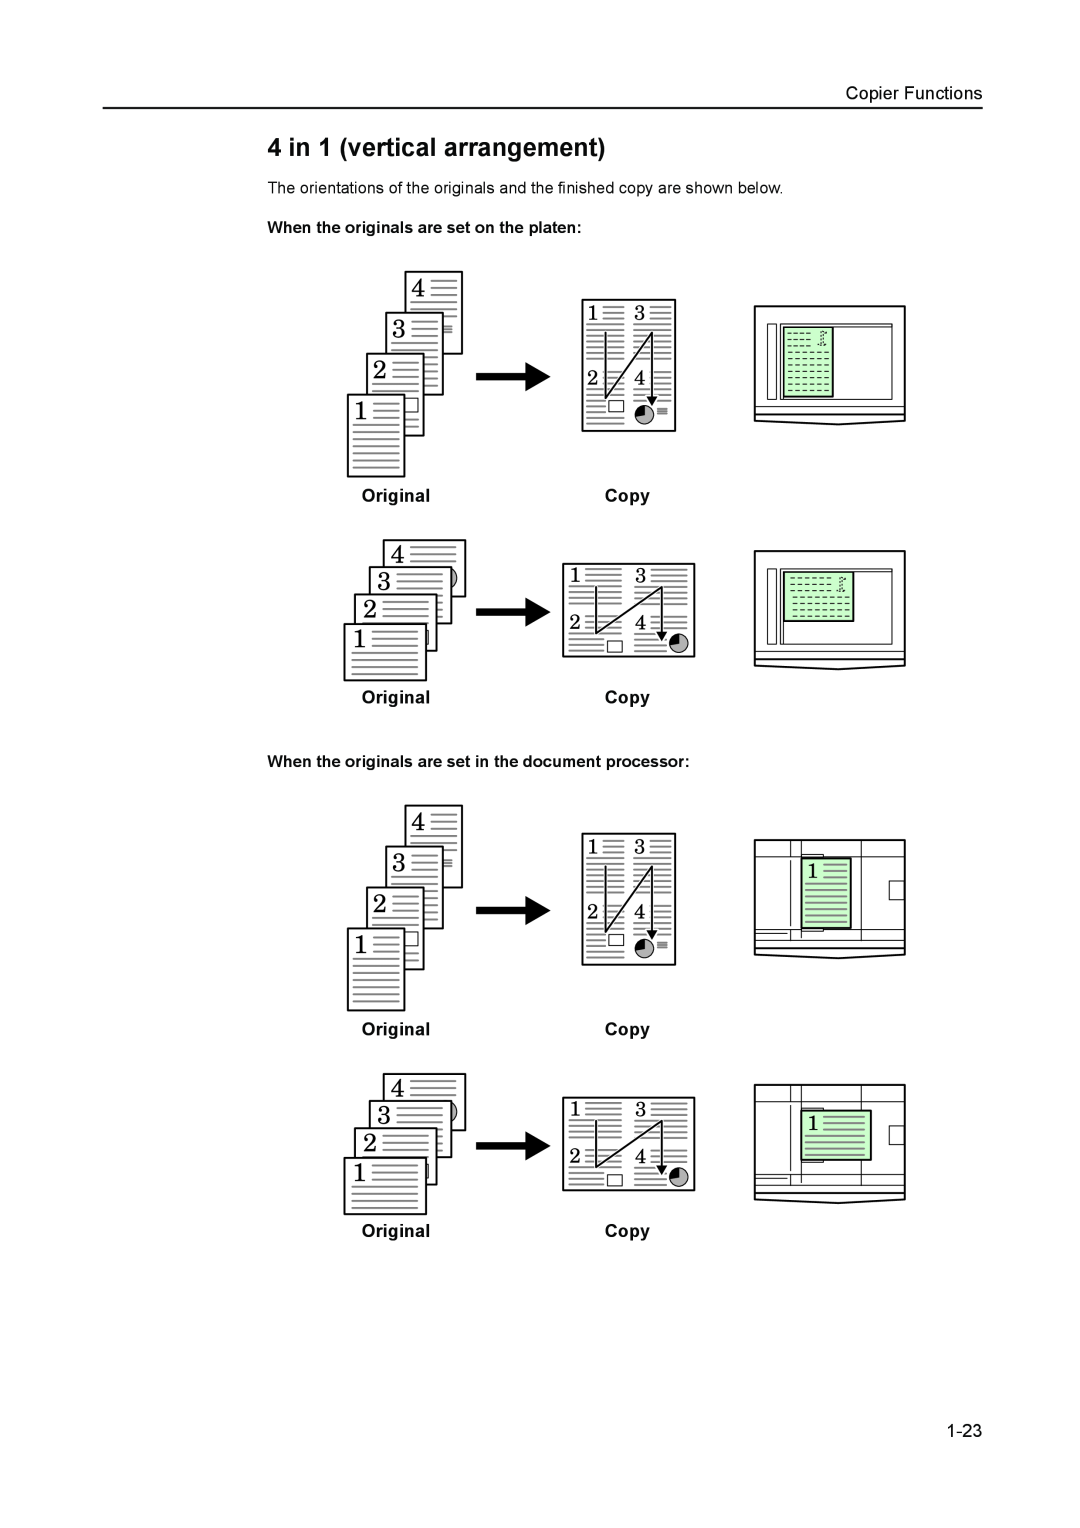 Kyocera 1650, 2050, 2550 manual 4 in 1 vertical arrangement, 1-23, Copier Functions, OriginalCopy OriginalCopy 